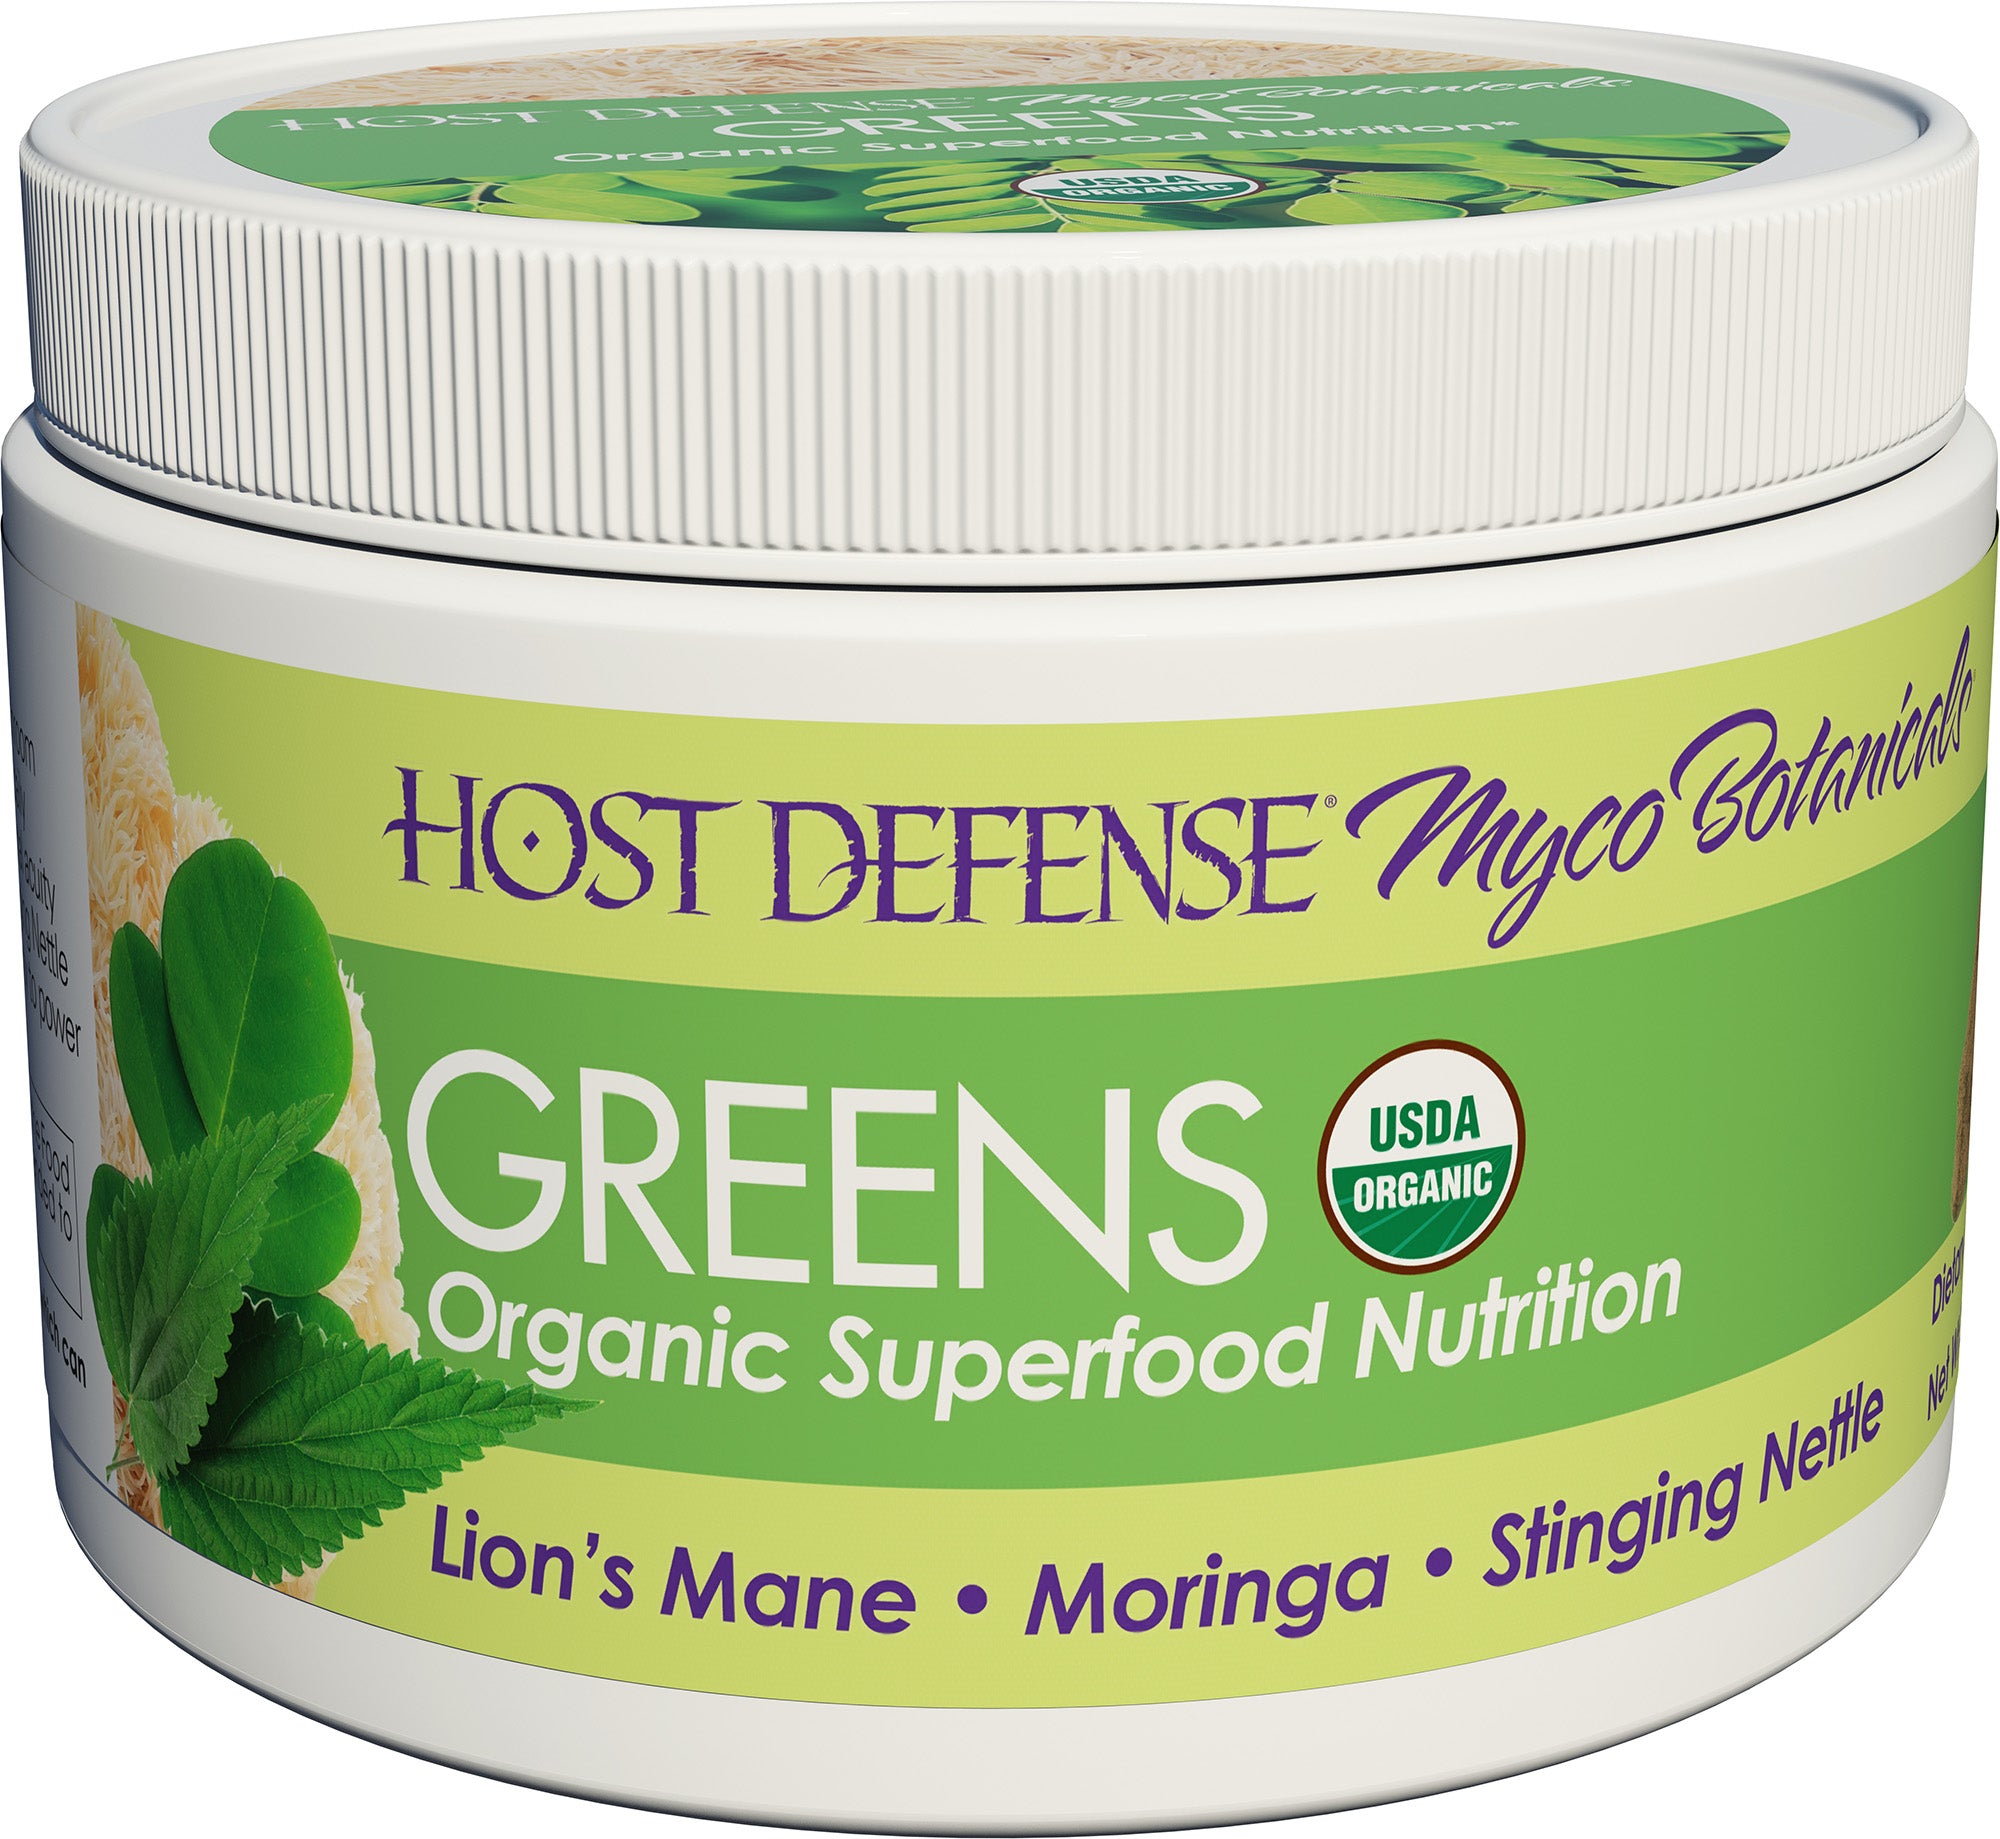 MycoBotanicals® Greens Powder